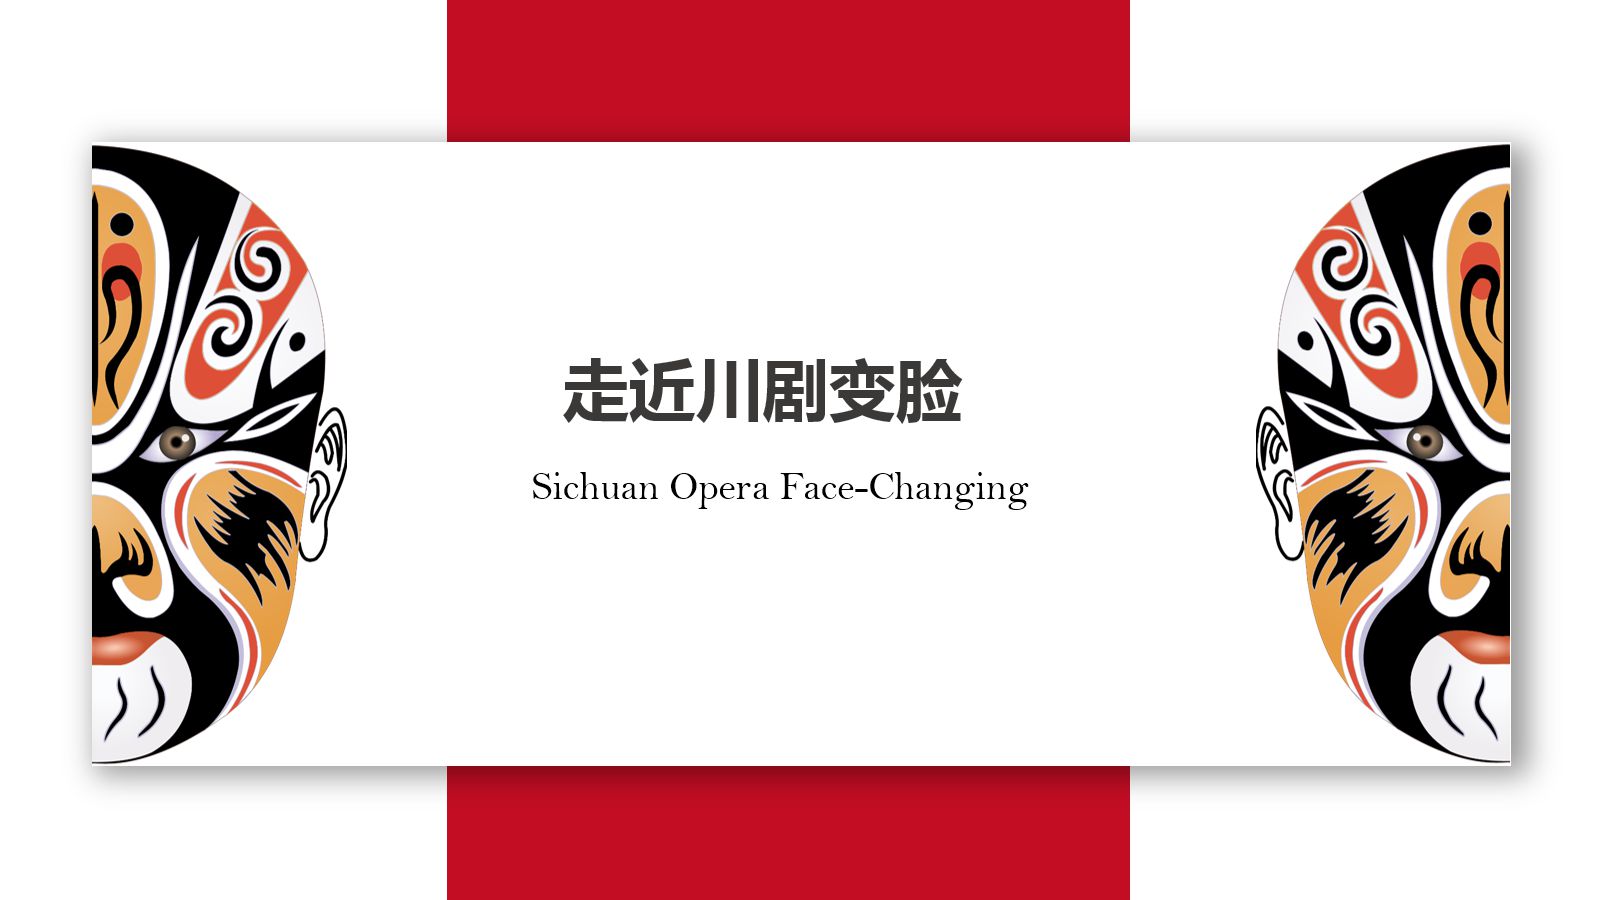 Sichuan Opera Face-Changing